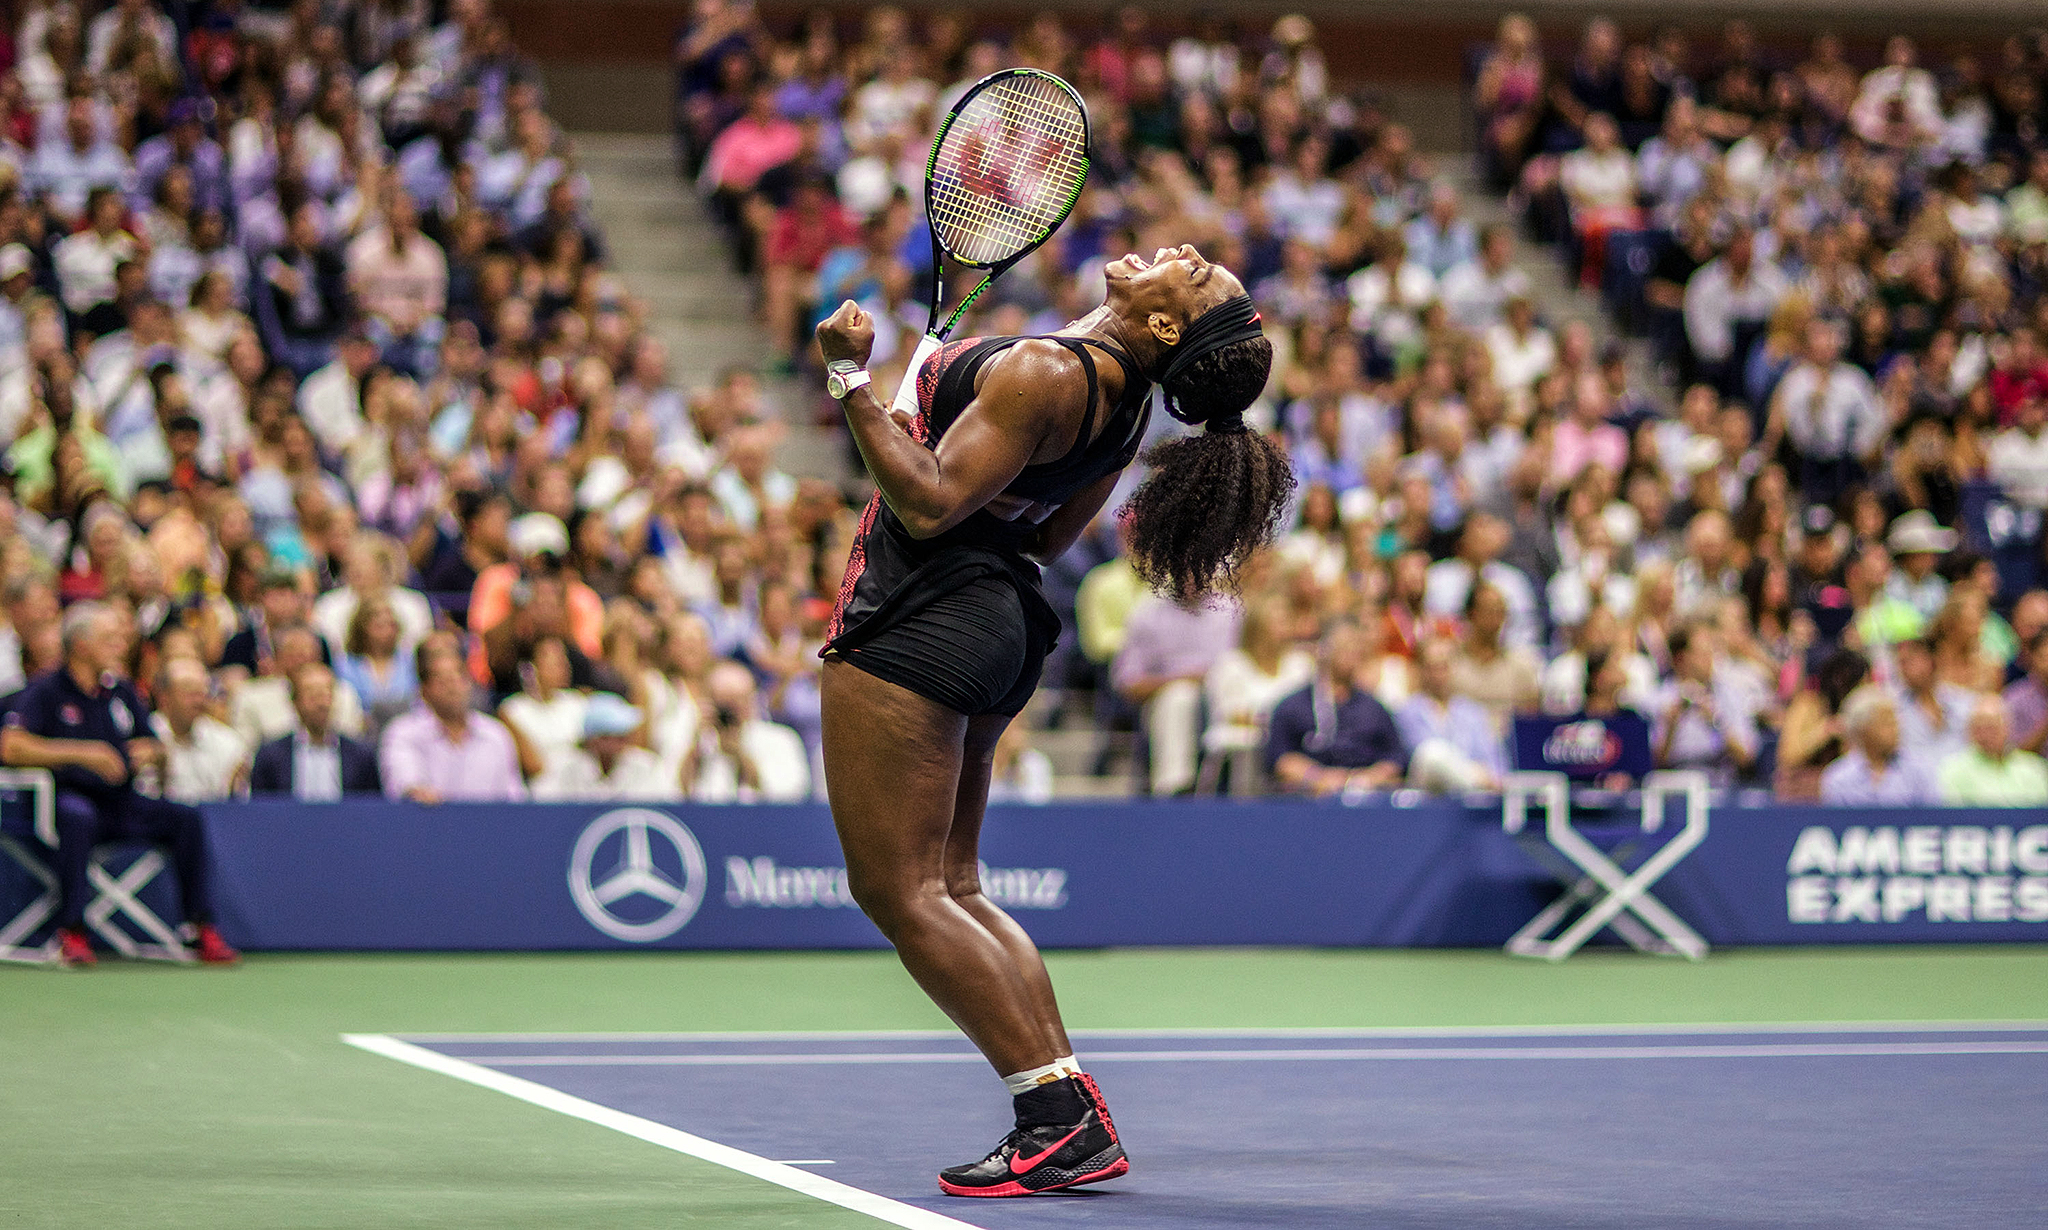 Serena Williams match point - Photos: Serena vs. Venus at the US Open - ESPN2048 x 1230